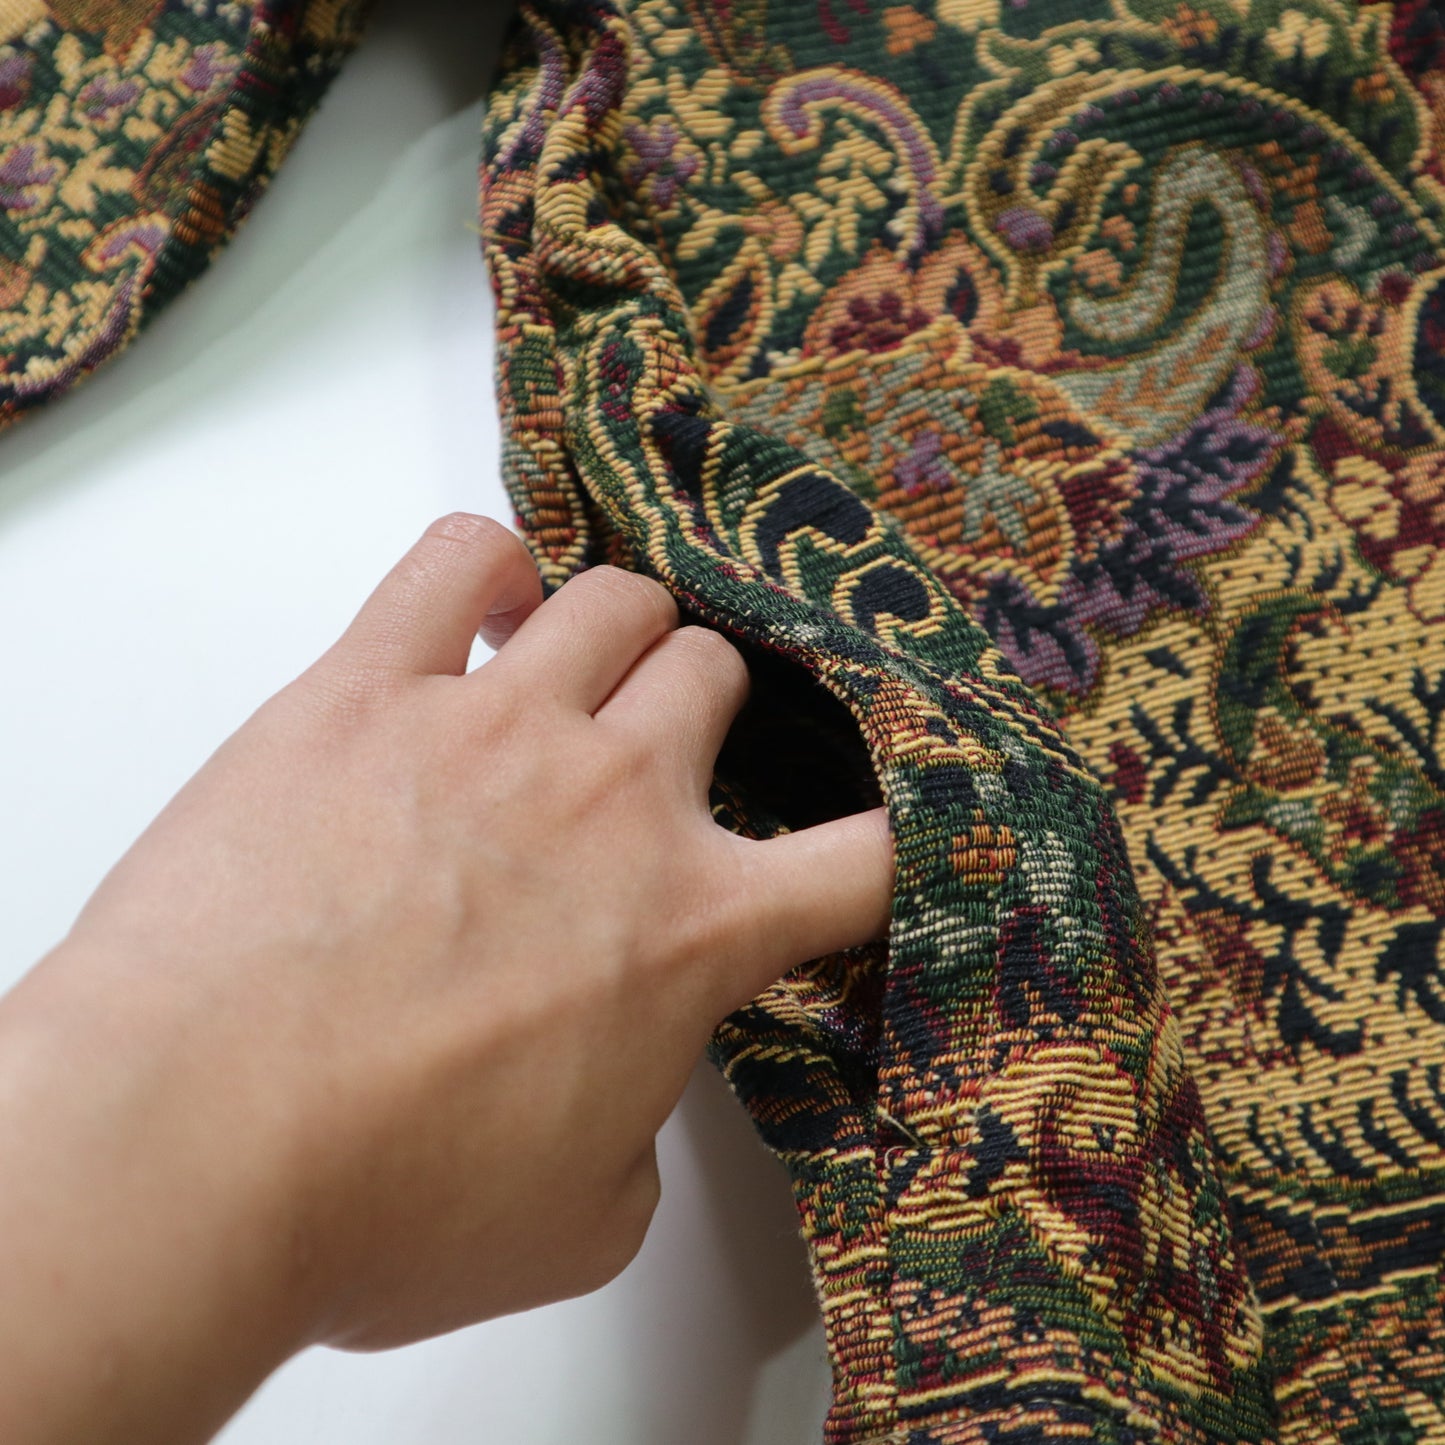 90s American-made amoeba totem tapestry jacket